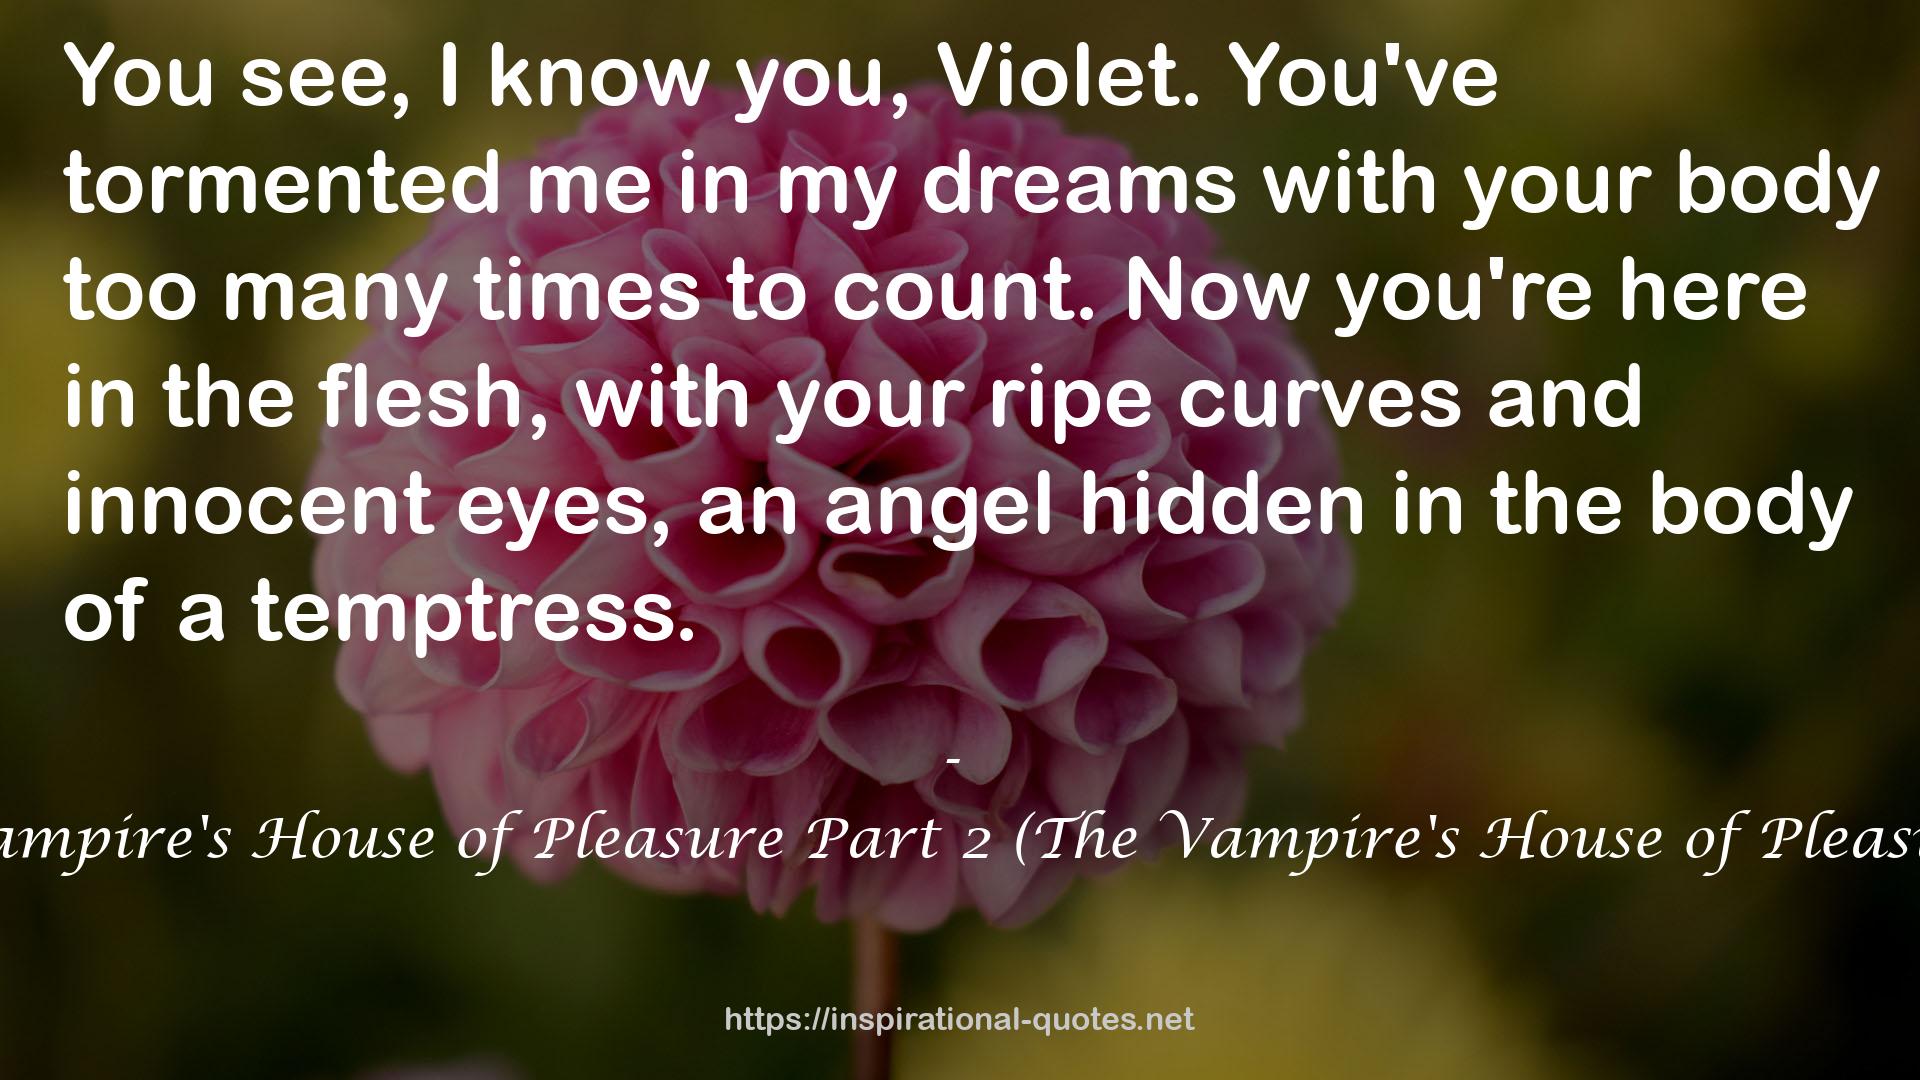 The Vampire's House of Pleasure Part 2 (The Vampire's House of Pleasure #2) QUOTES